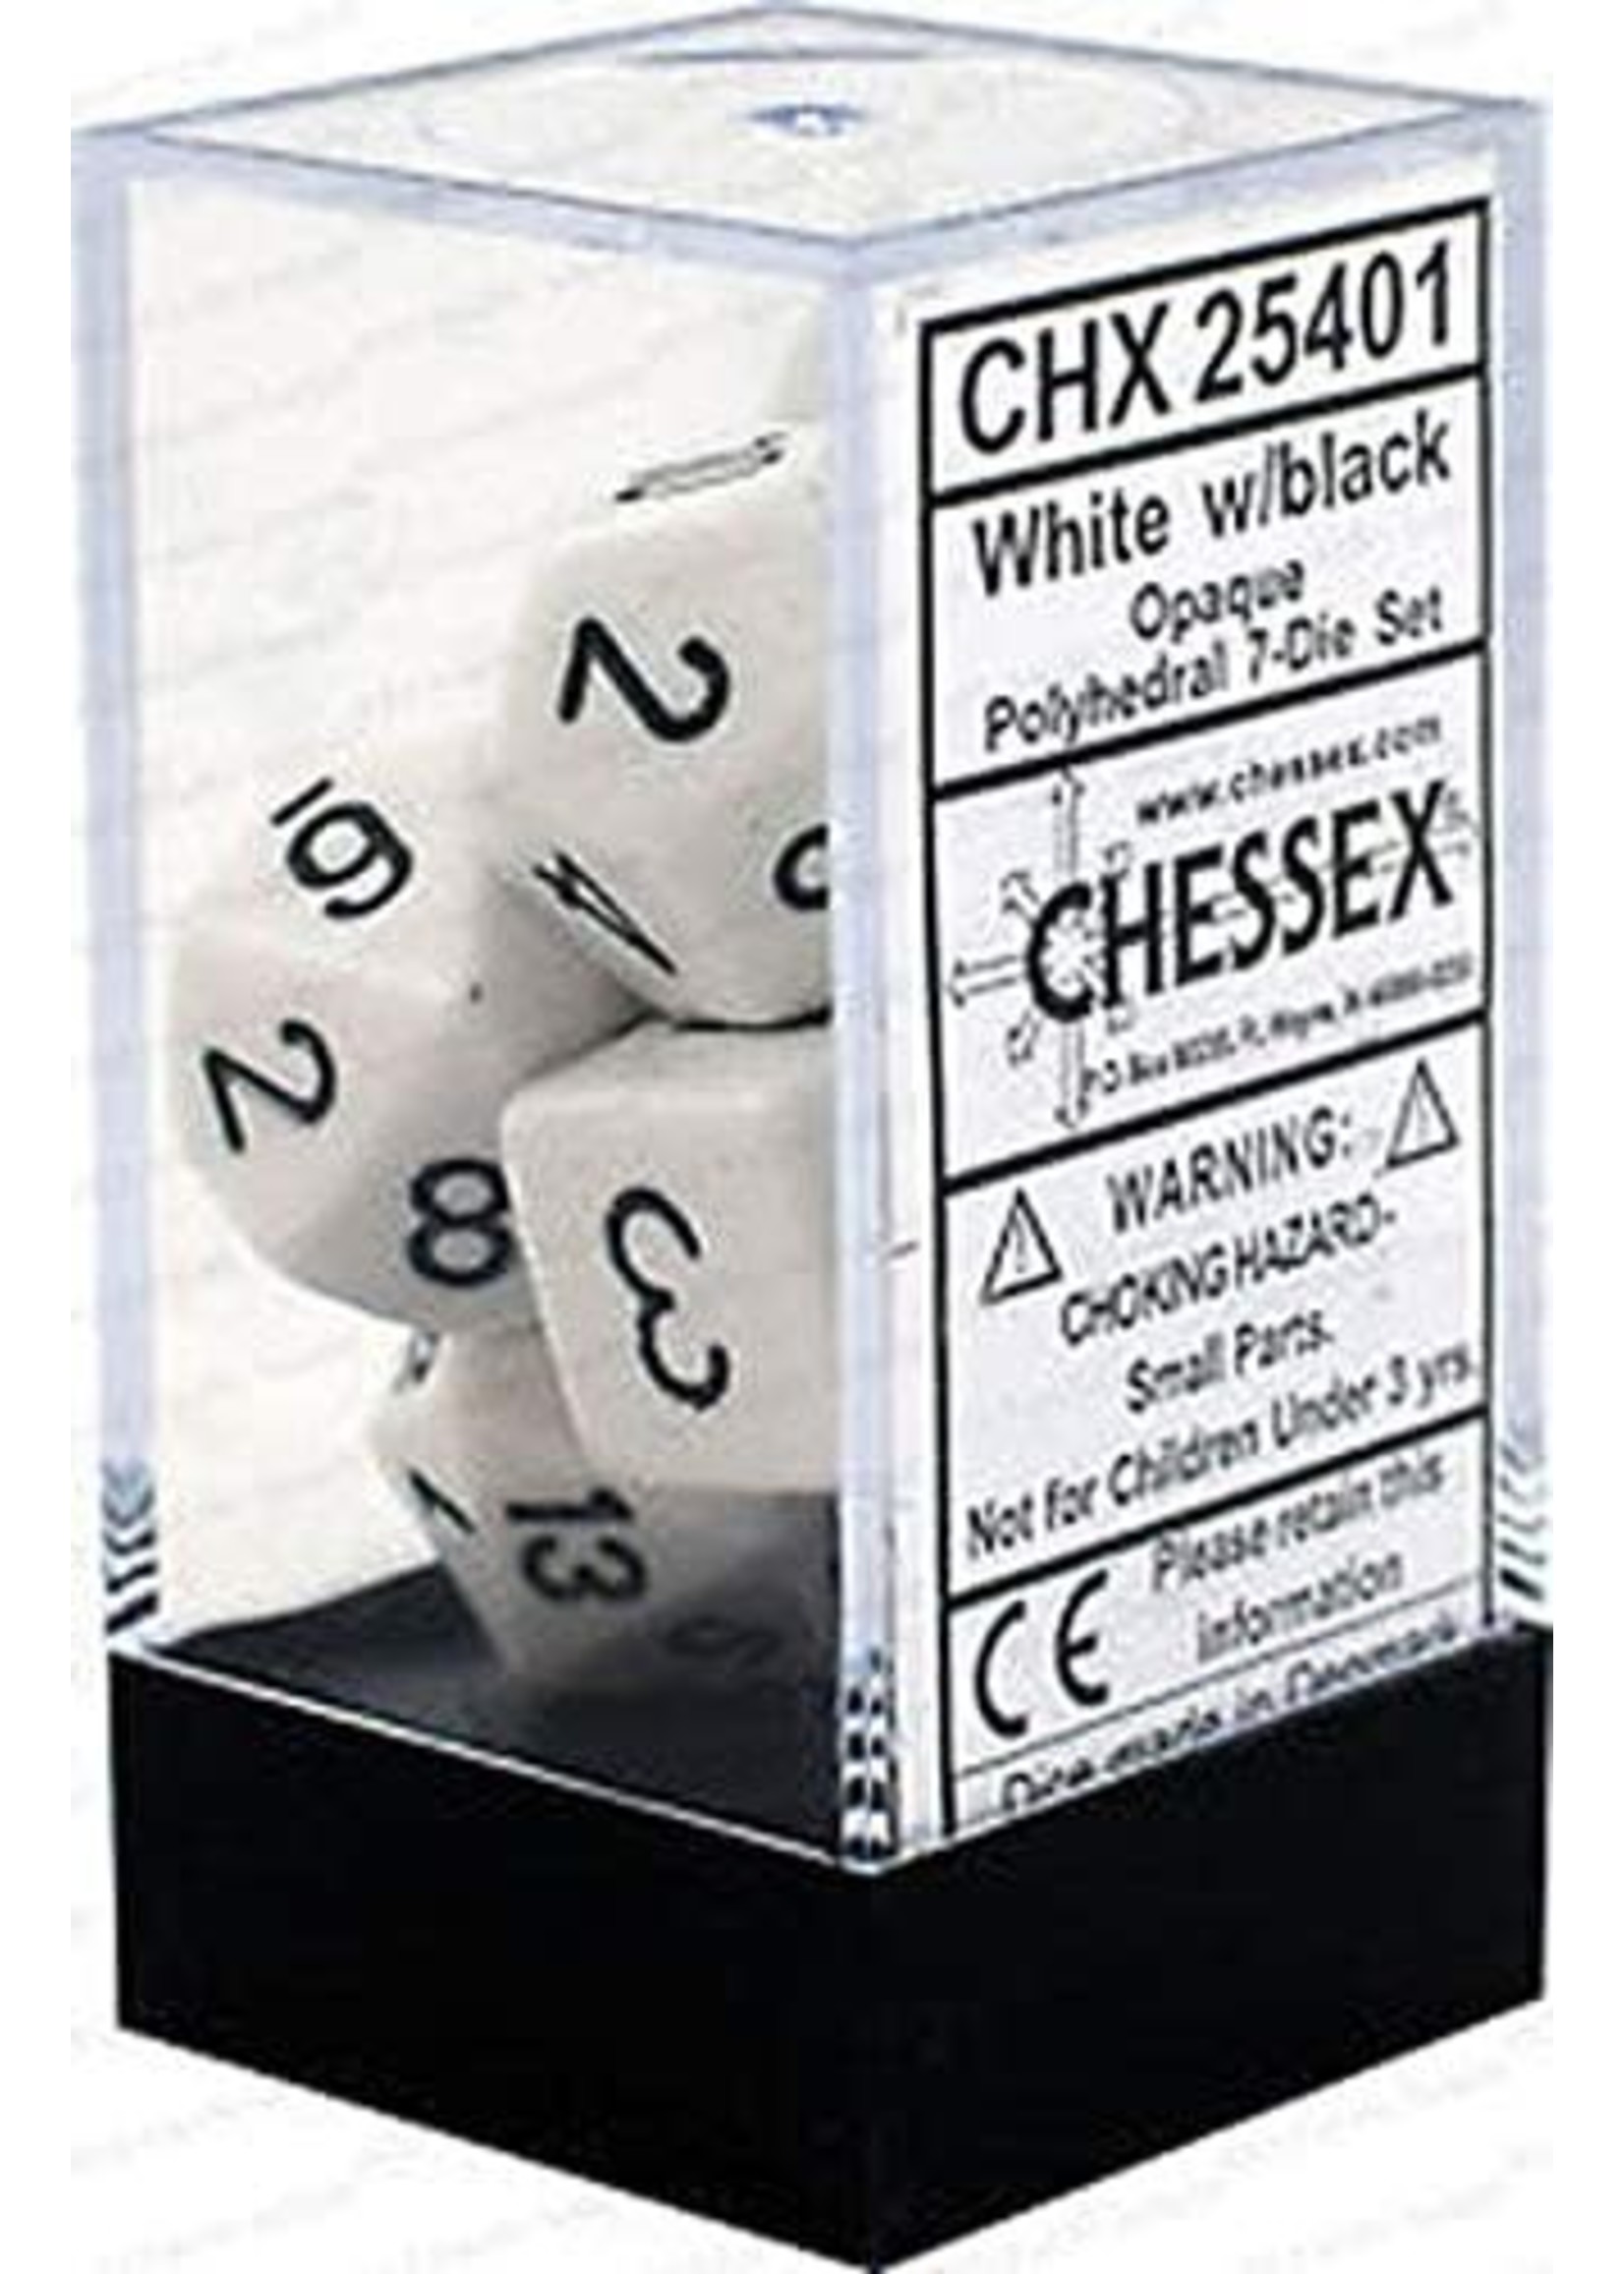 Chessex Opaque Poly 7 set: White w/ Black